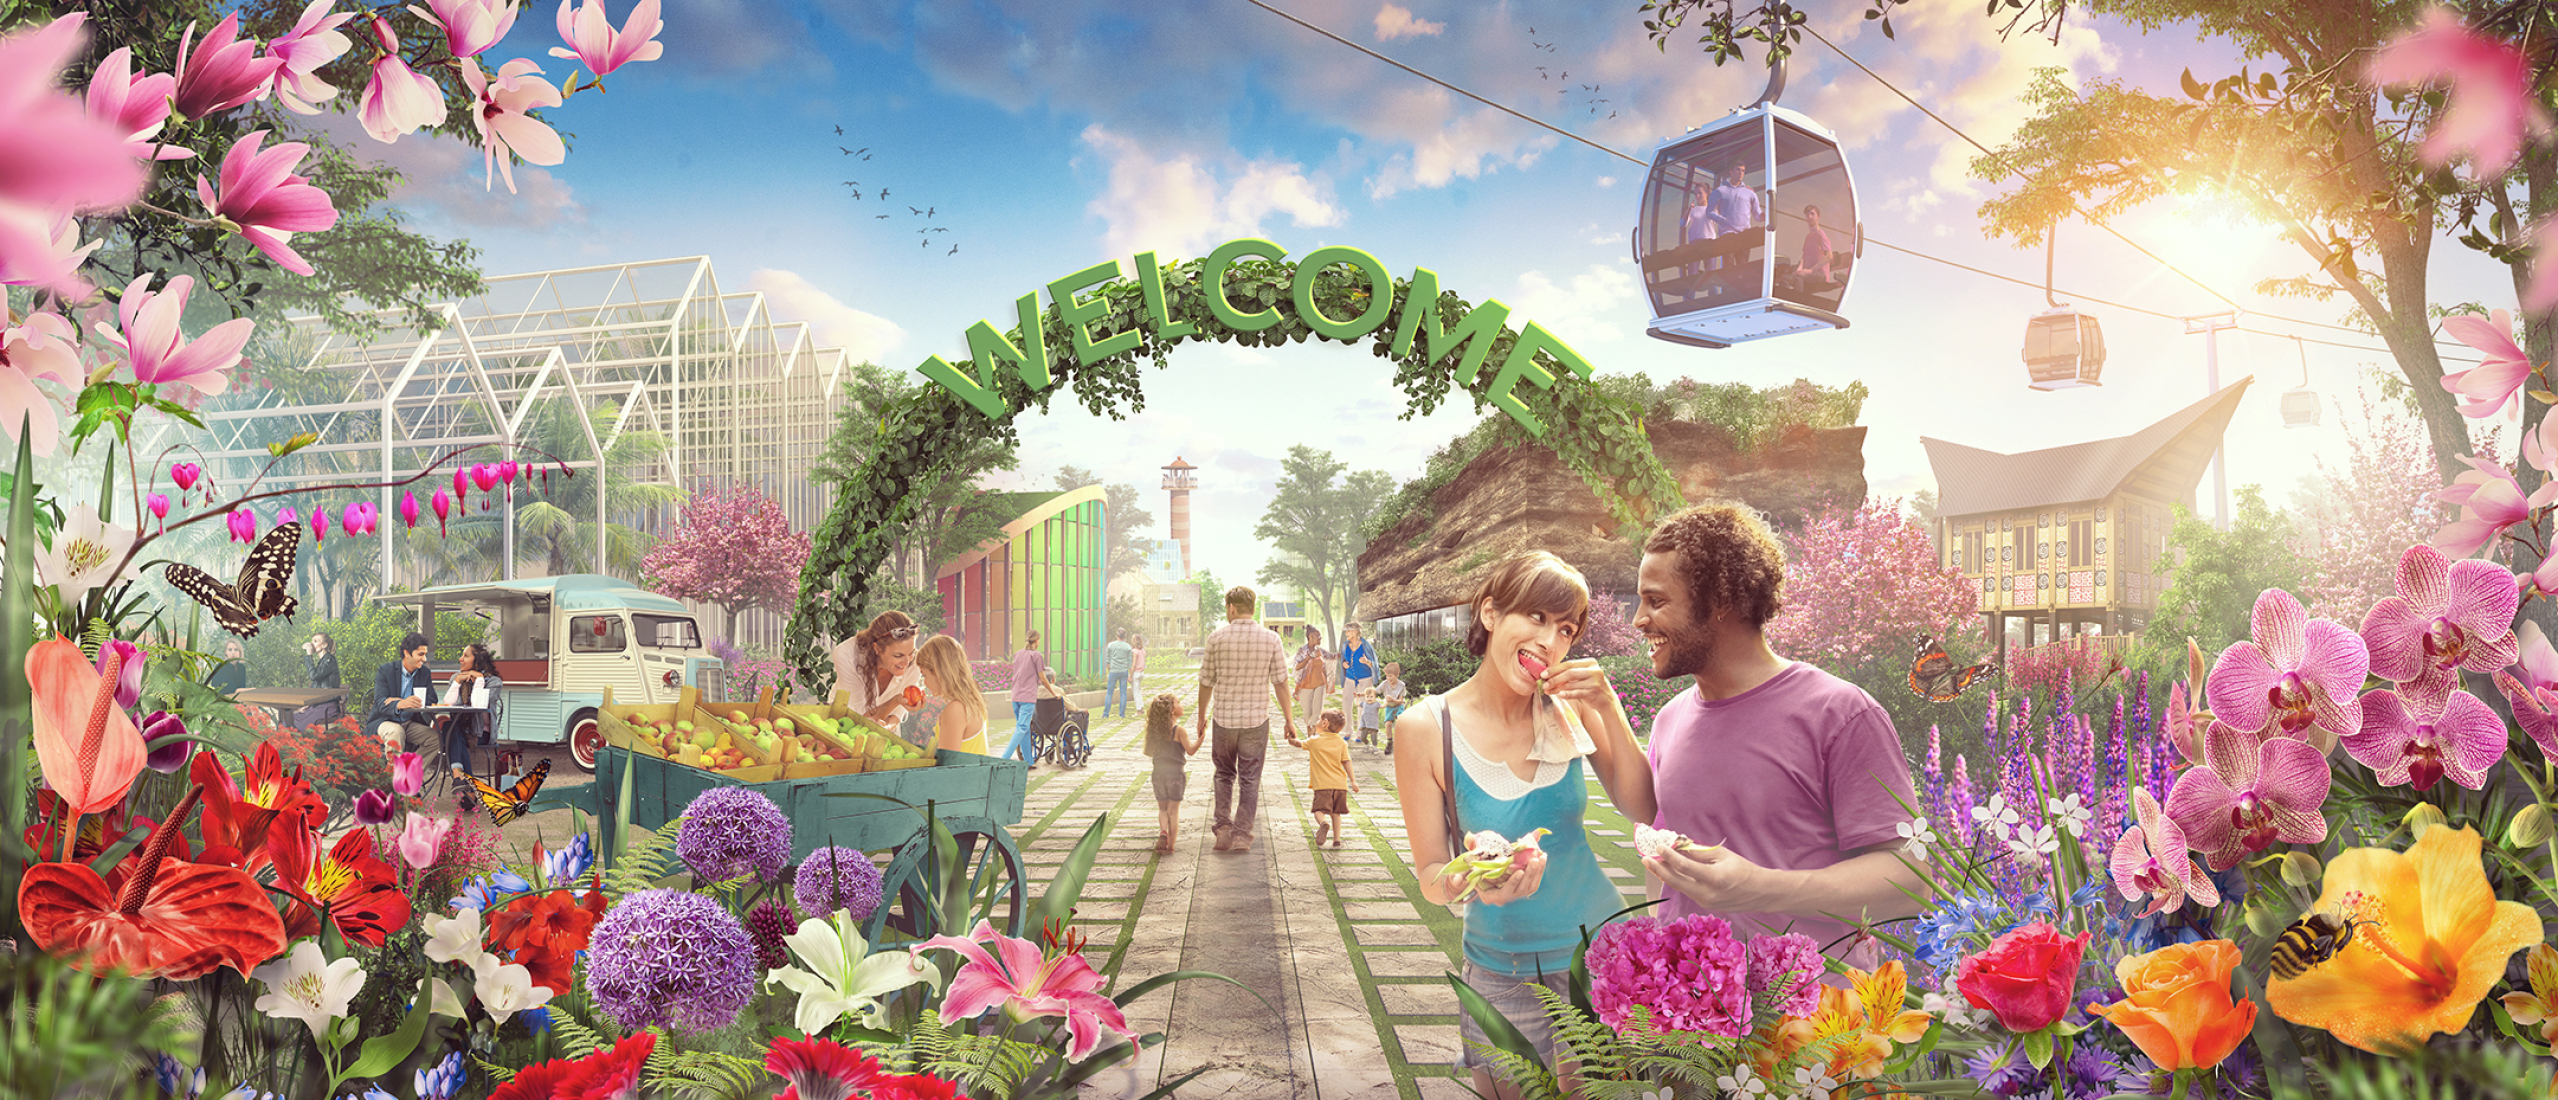 The Green city at Floriade Expo 2022